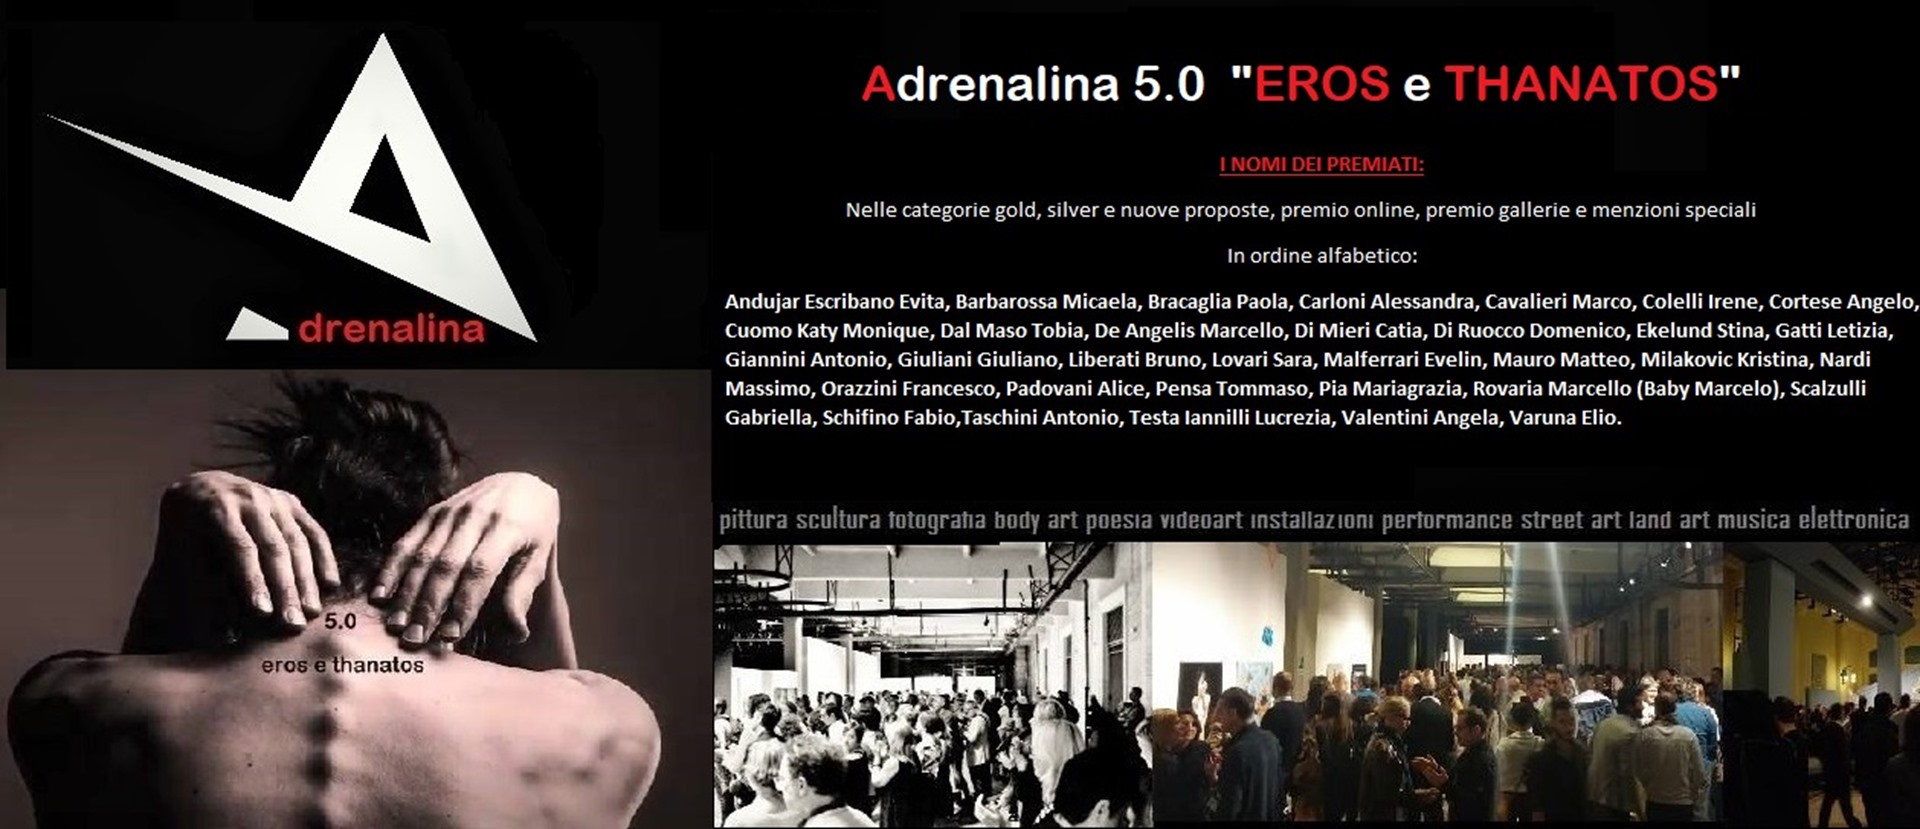 I premiati di Adrenalina 5.0 Eros & Thanatos